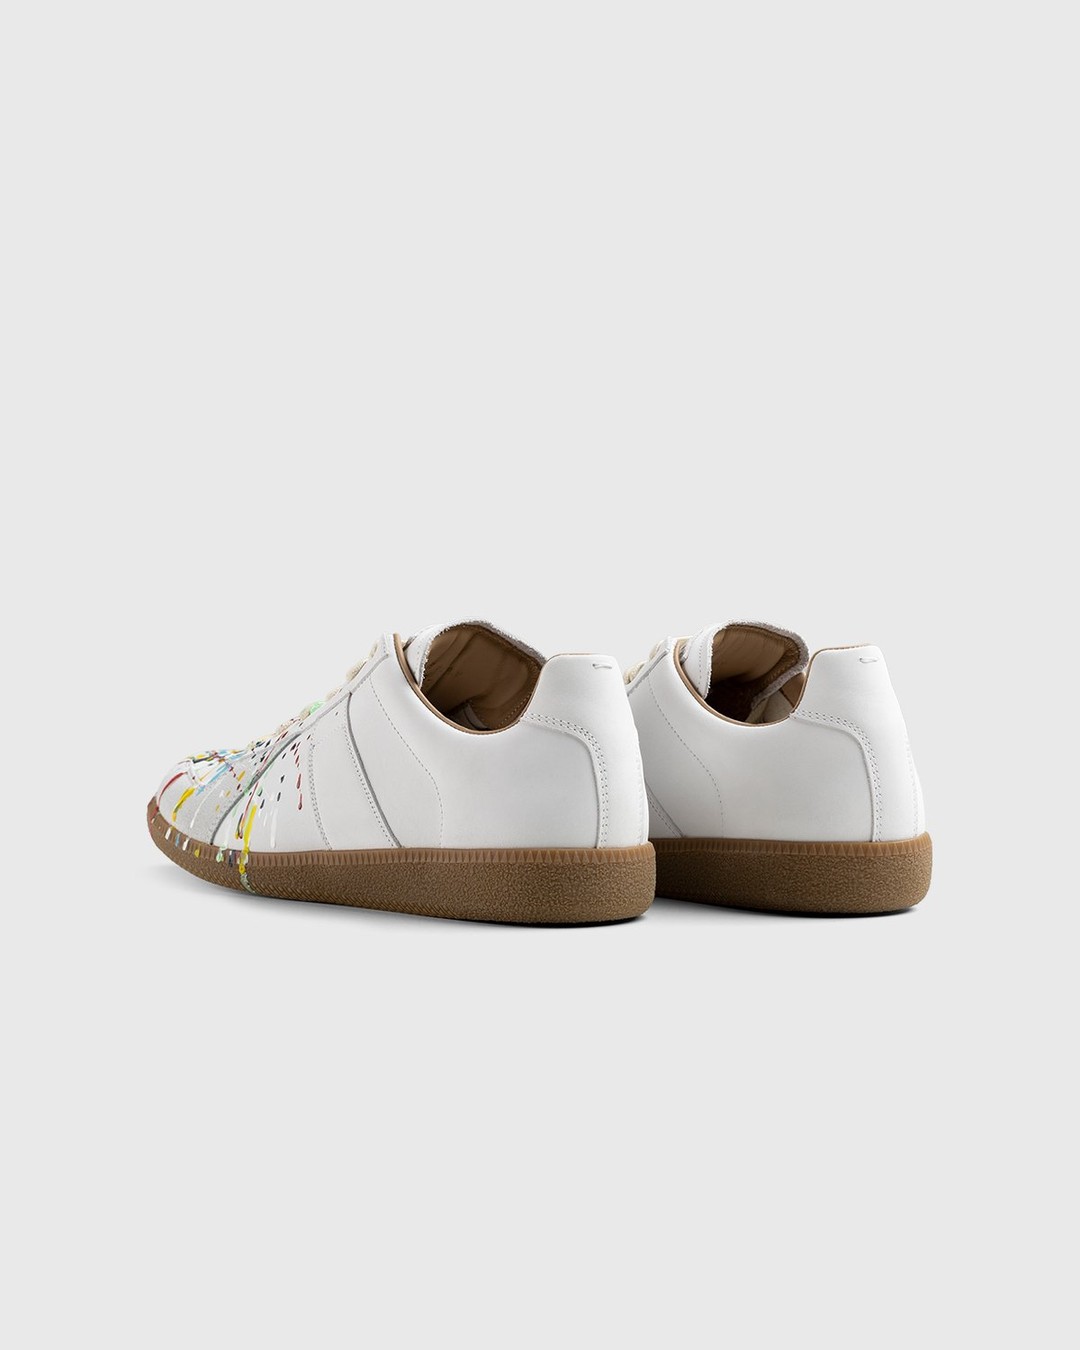 Maison Margiela – Replica Paint Drop Sneakers White - Sneakers - White - Image 3